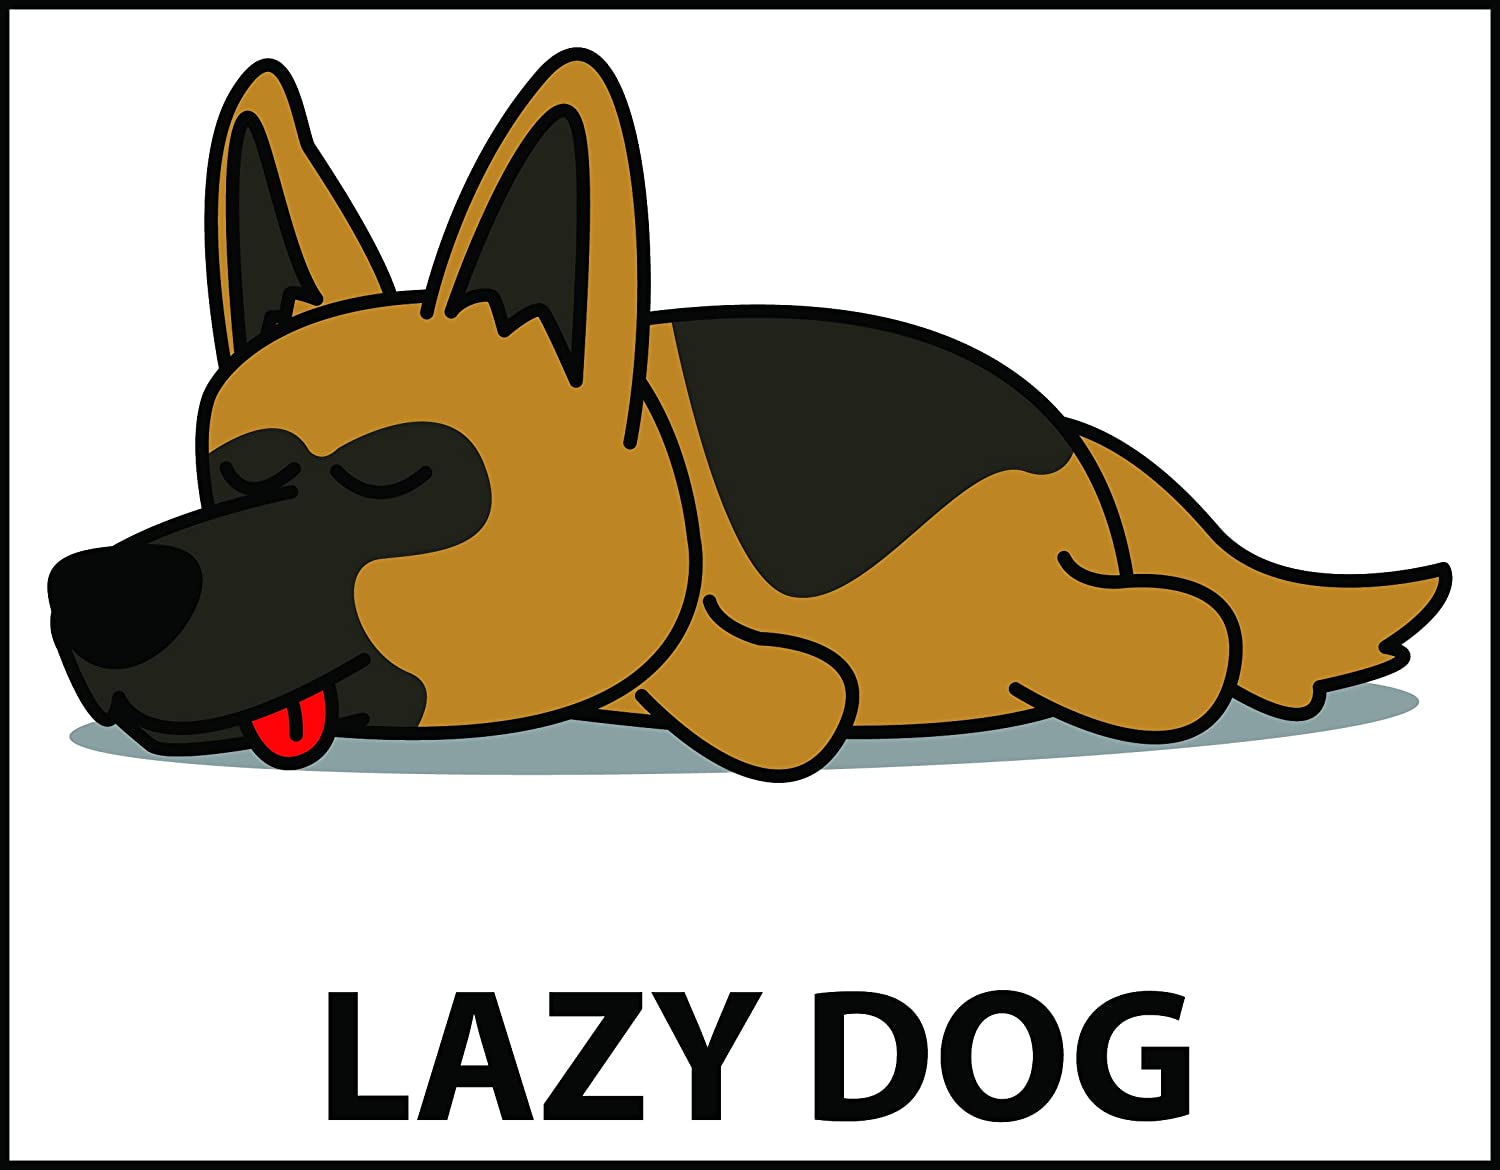 How To Draw A Cartoon German Shepherd Puppy